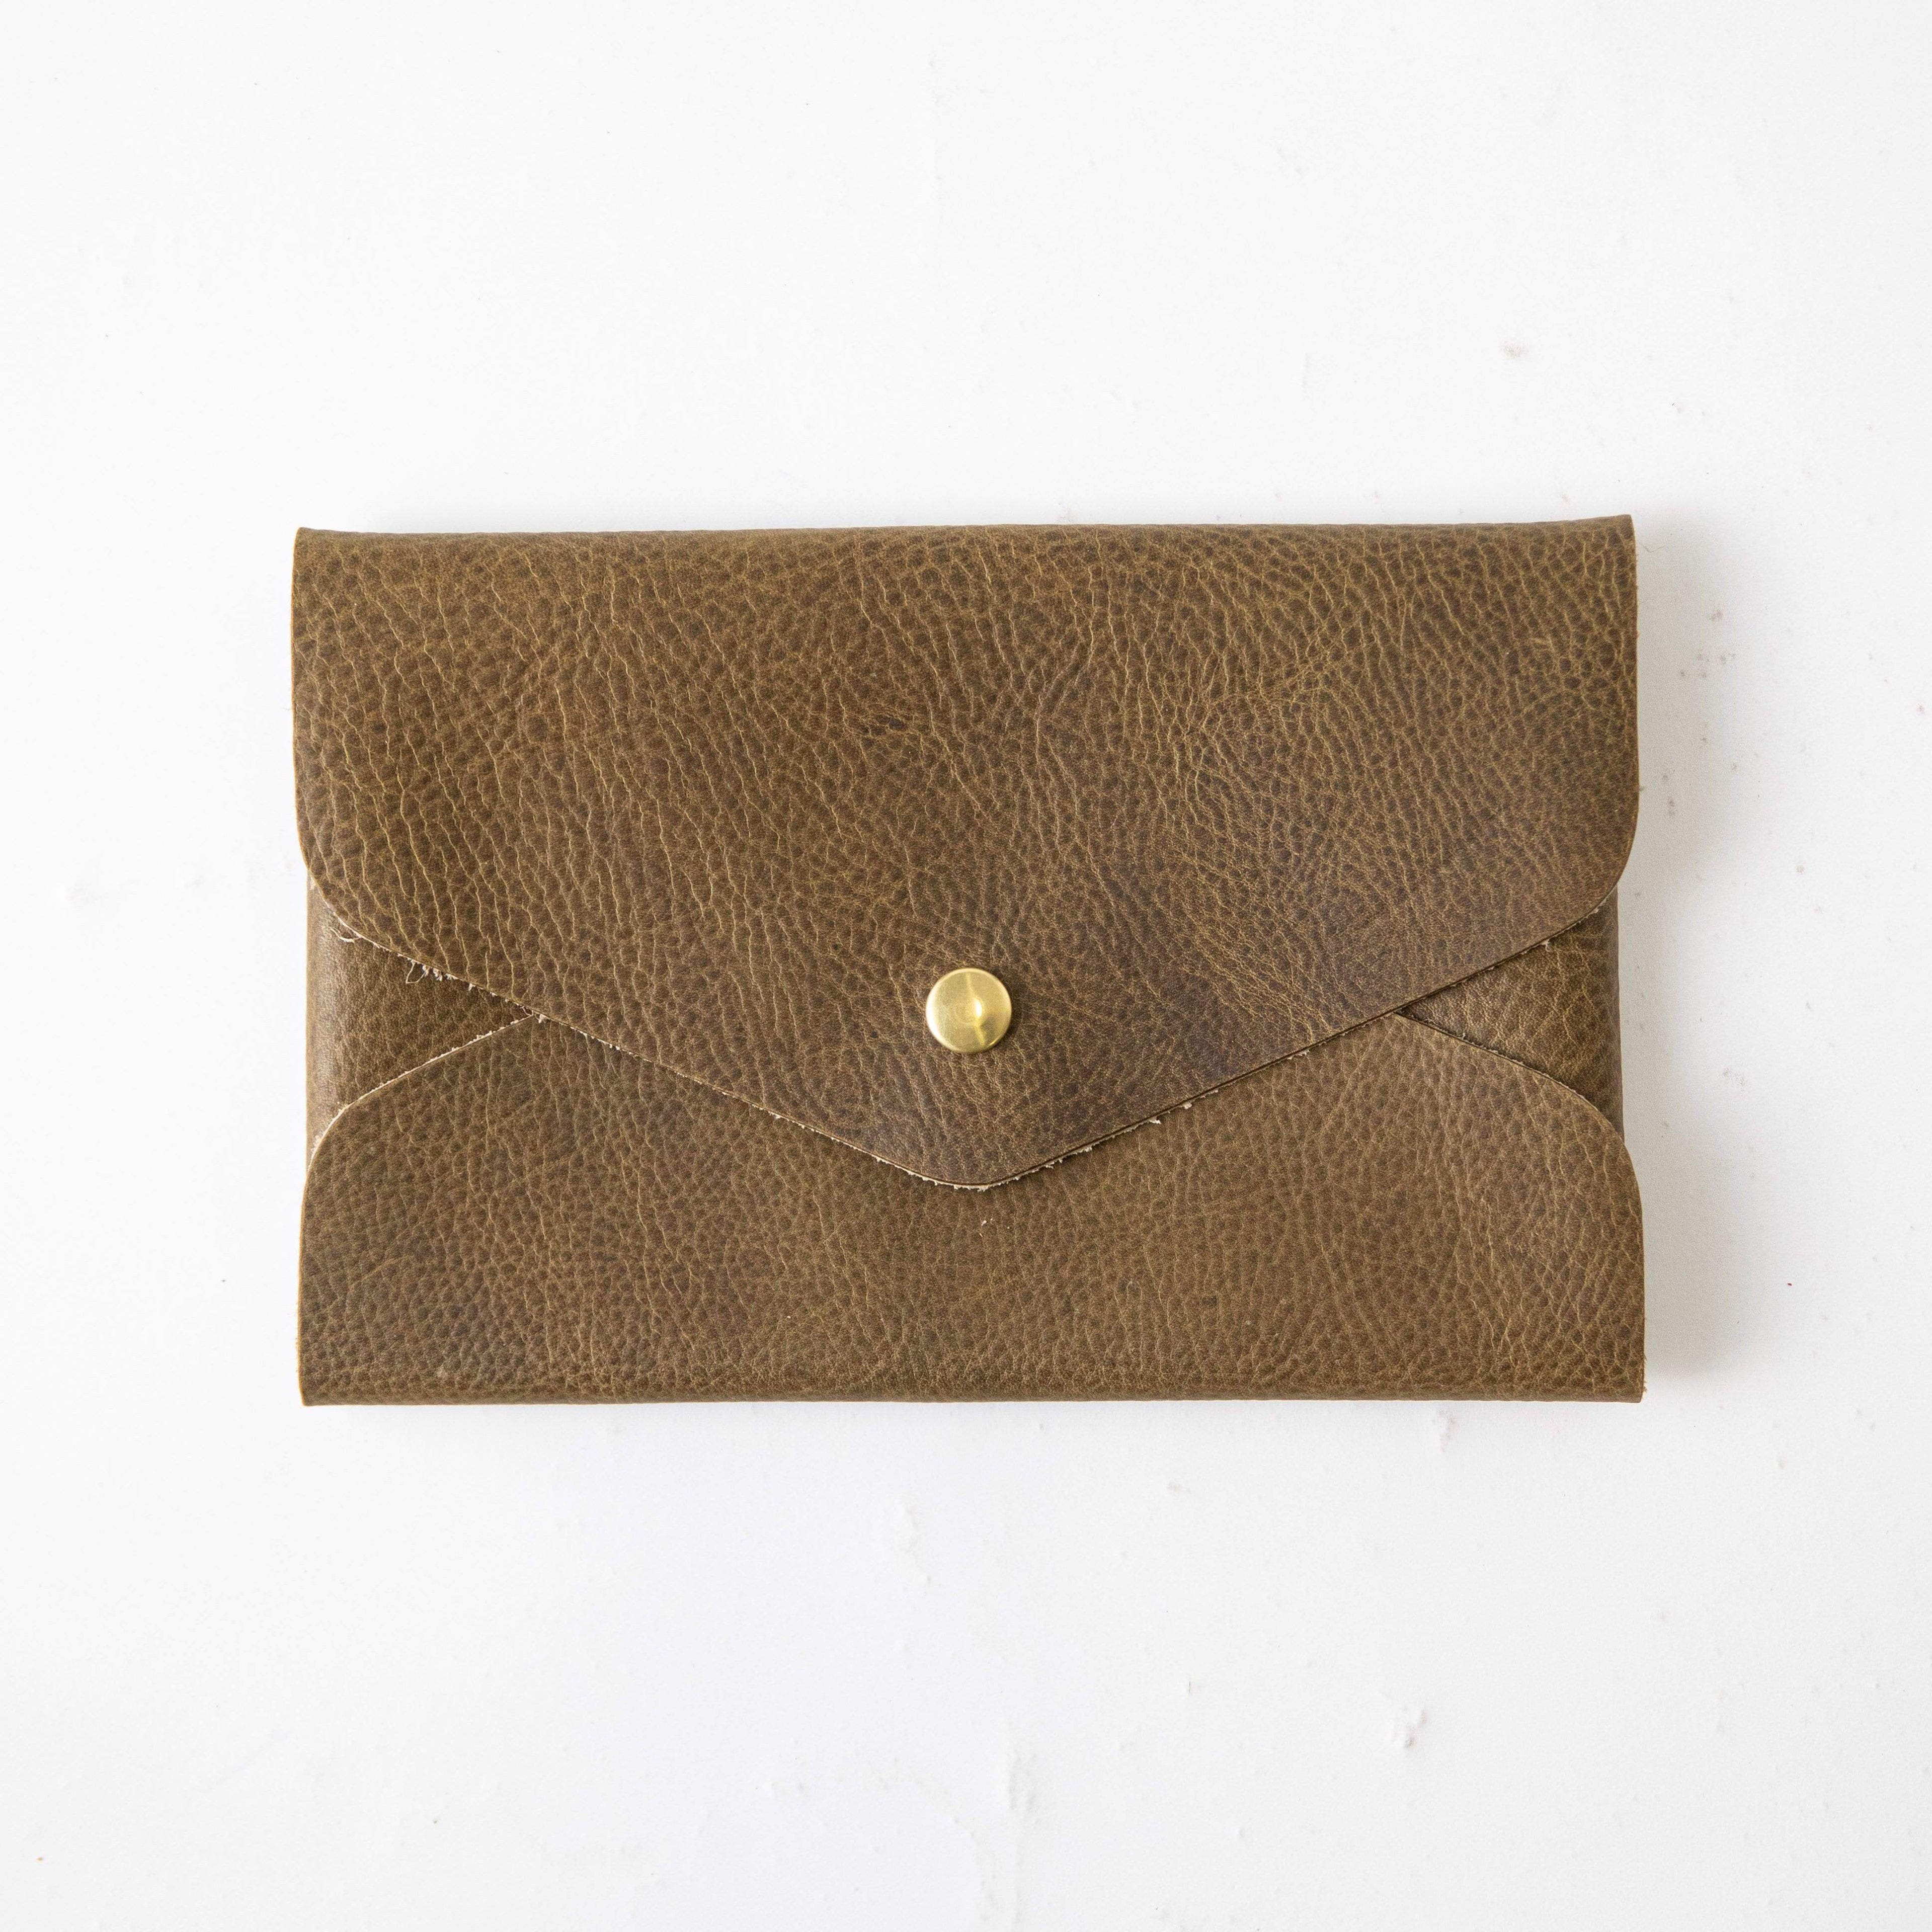 TAH Envelope Slim Leather Clutch and Shoulder Bag NavyITAH